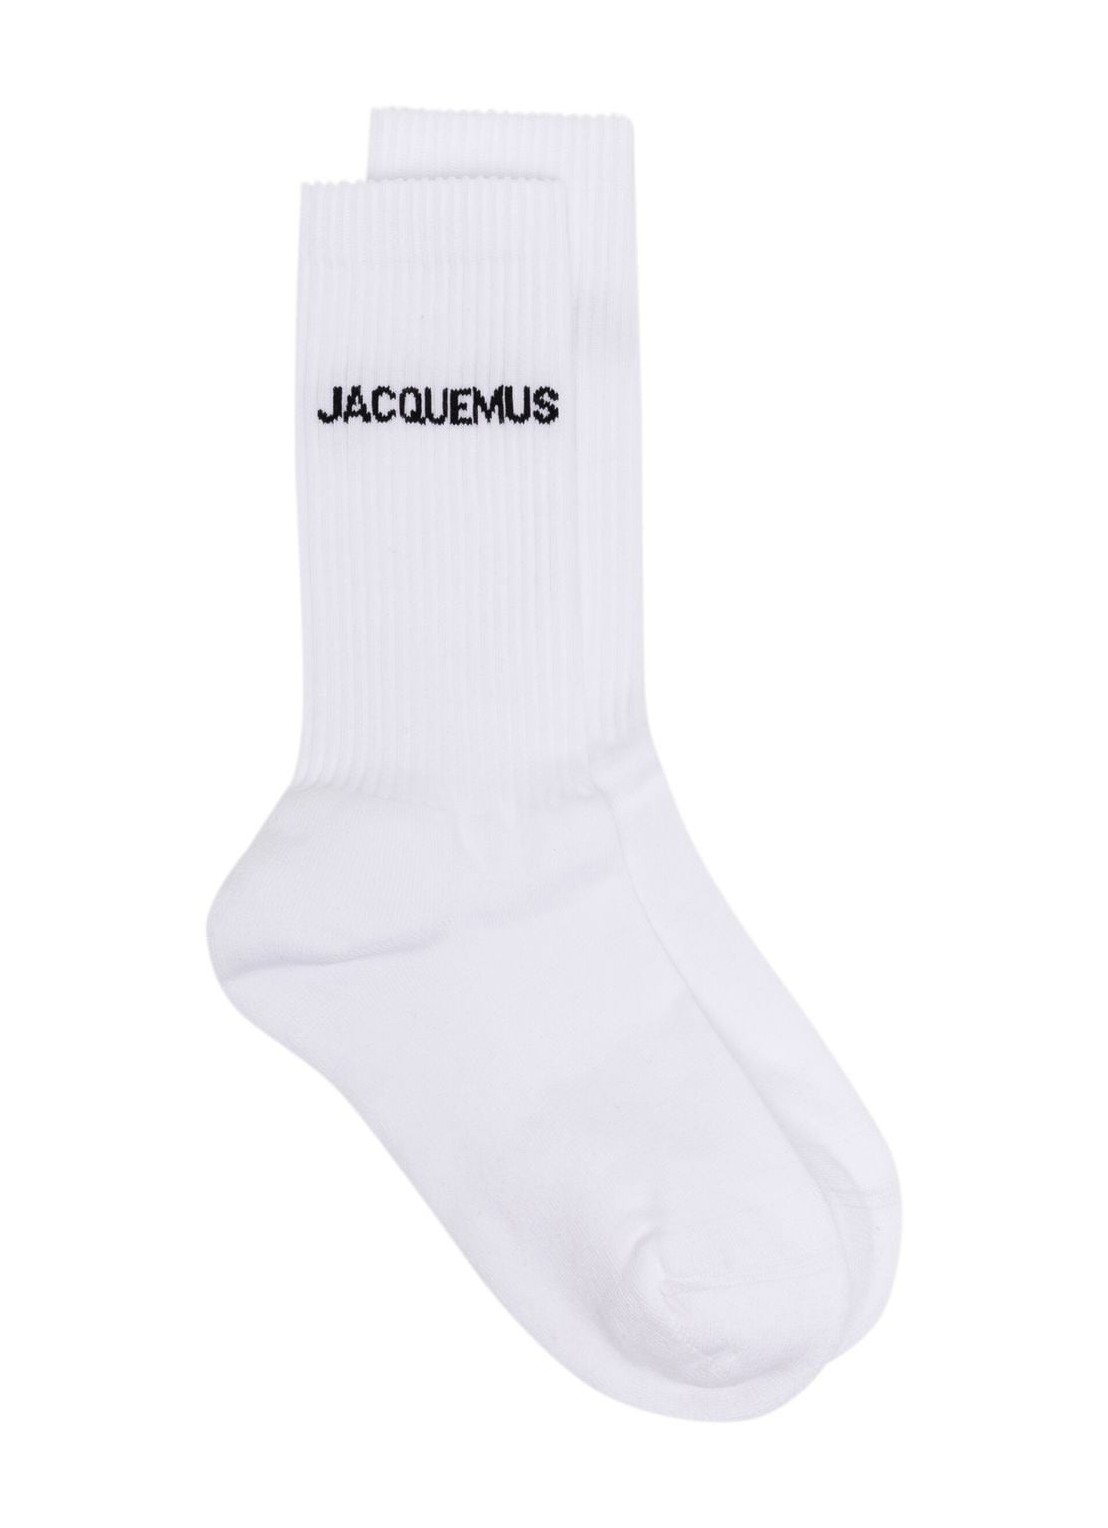 Calcetines jacquemus socks man les chaussettes jacquemus 21h213ac0035000 100 talla 43-46
 